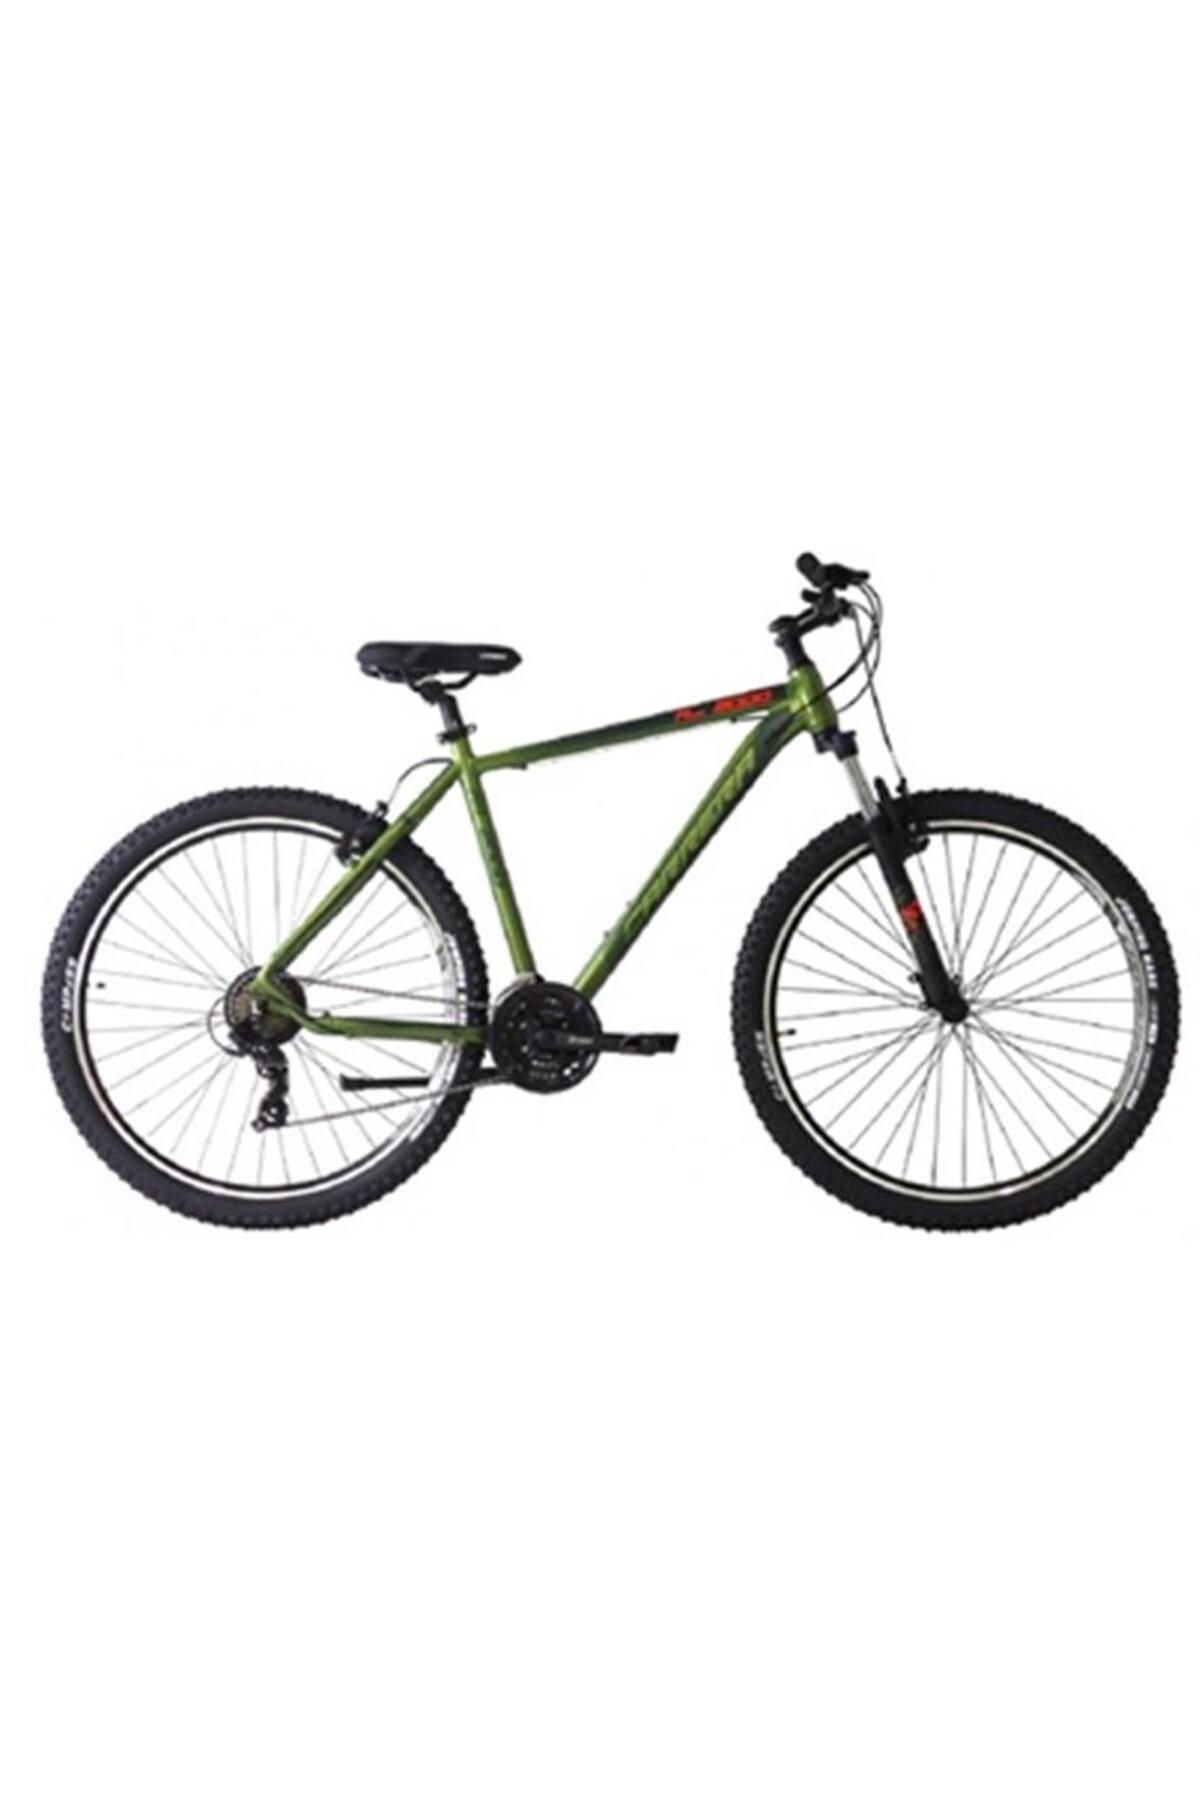 Carrera 2965 M09-2000-m Erkek Dağ Bisikleti 485h V 29 Jant 21 Vites Green Green Red